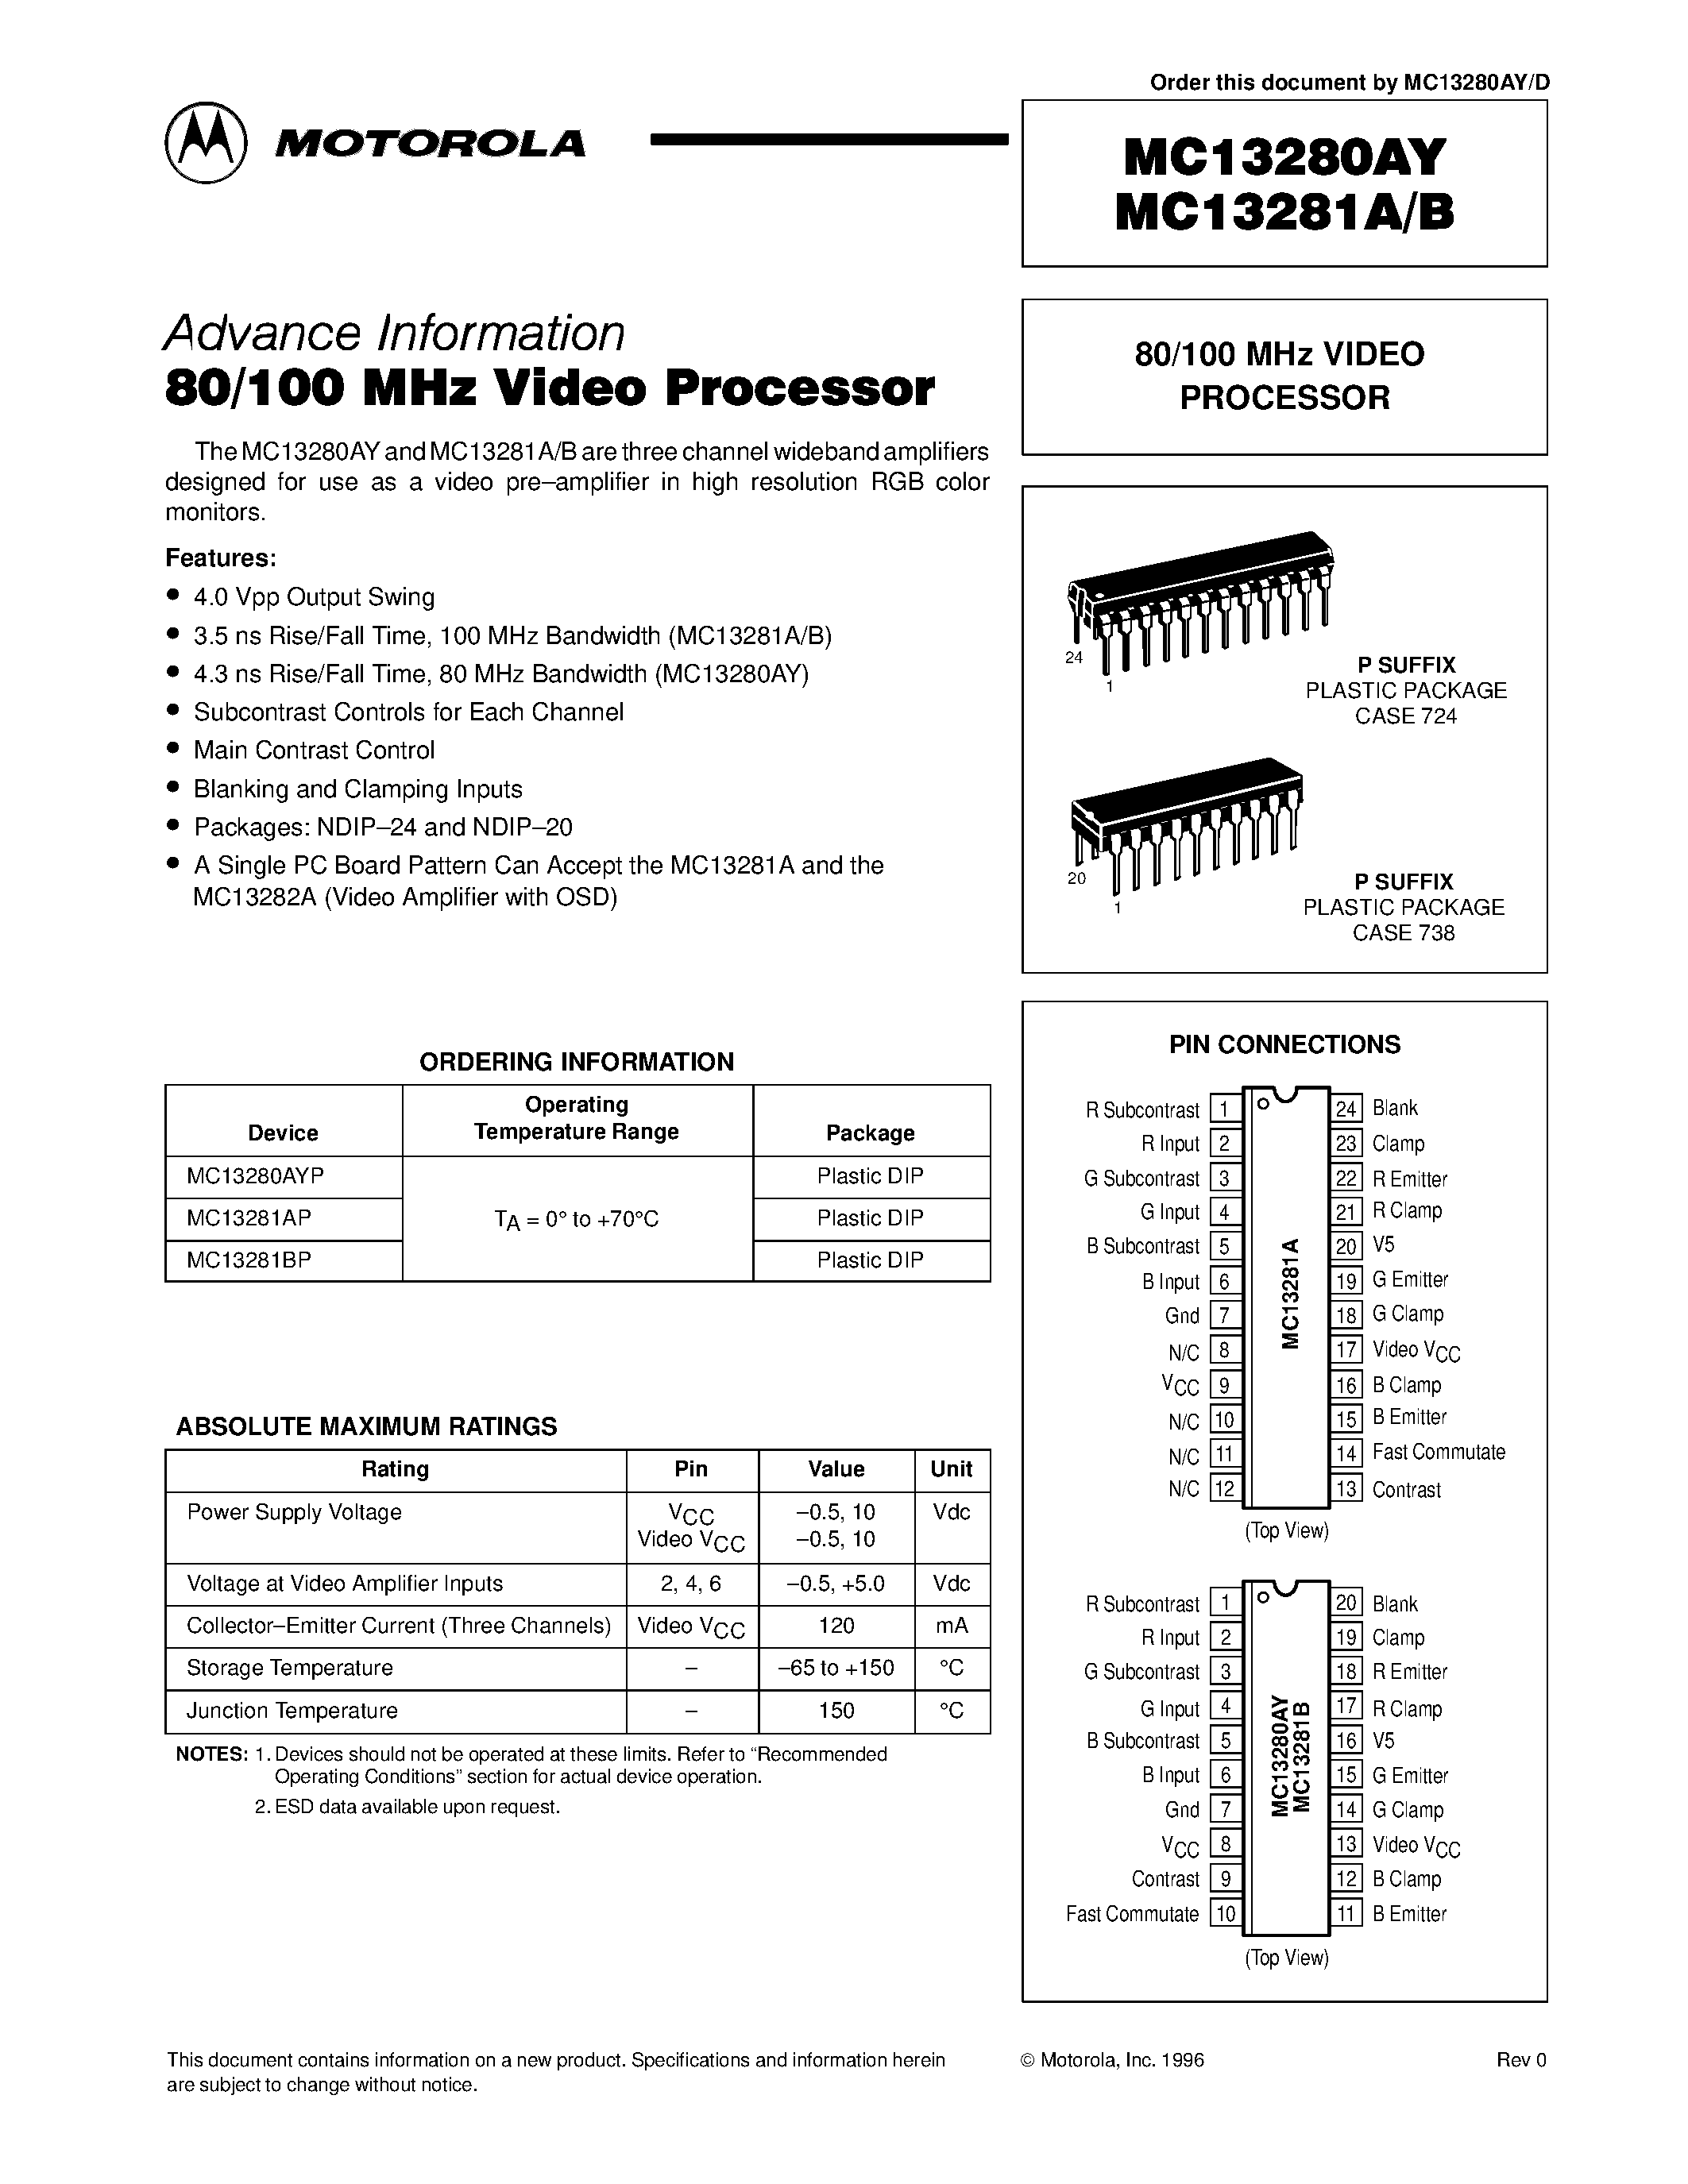 Datasheet MC13281AP - 80/100 MHz VIDEO PROCESSOR page 1